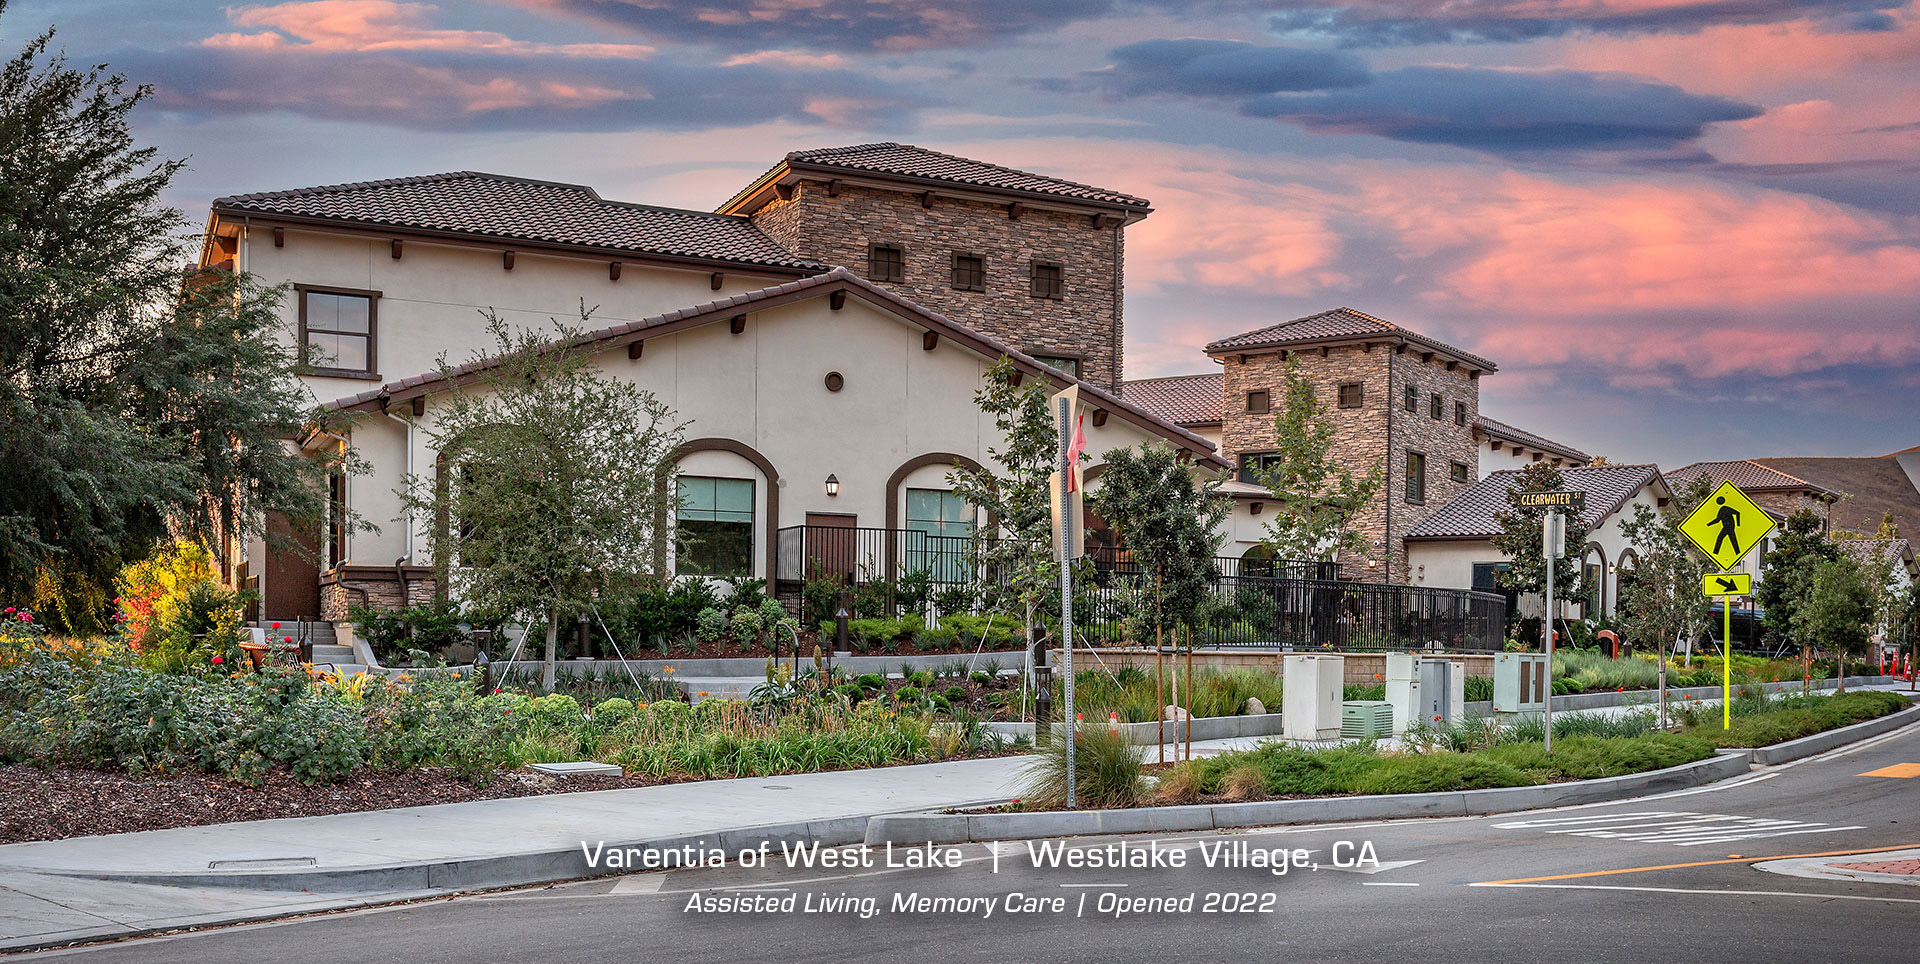 Varentia of Westlake - Westlake Village, CA